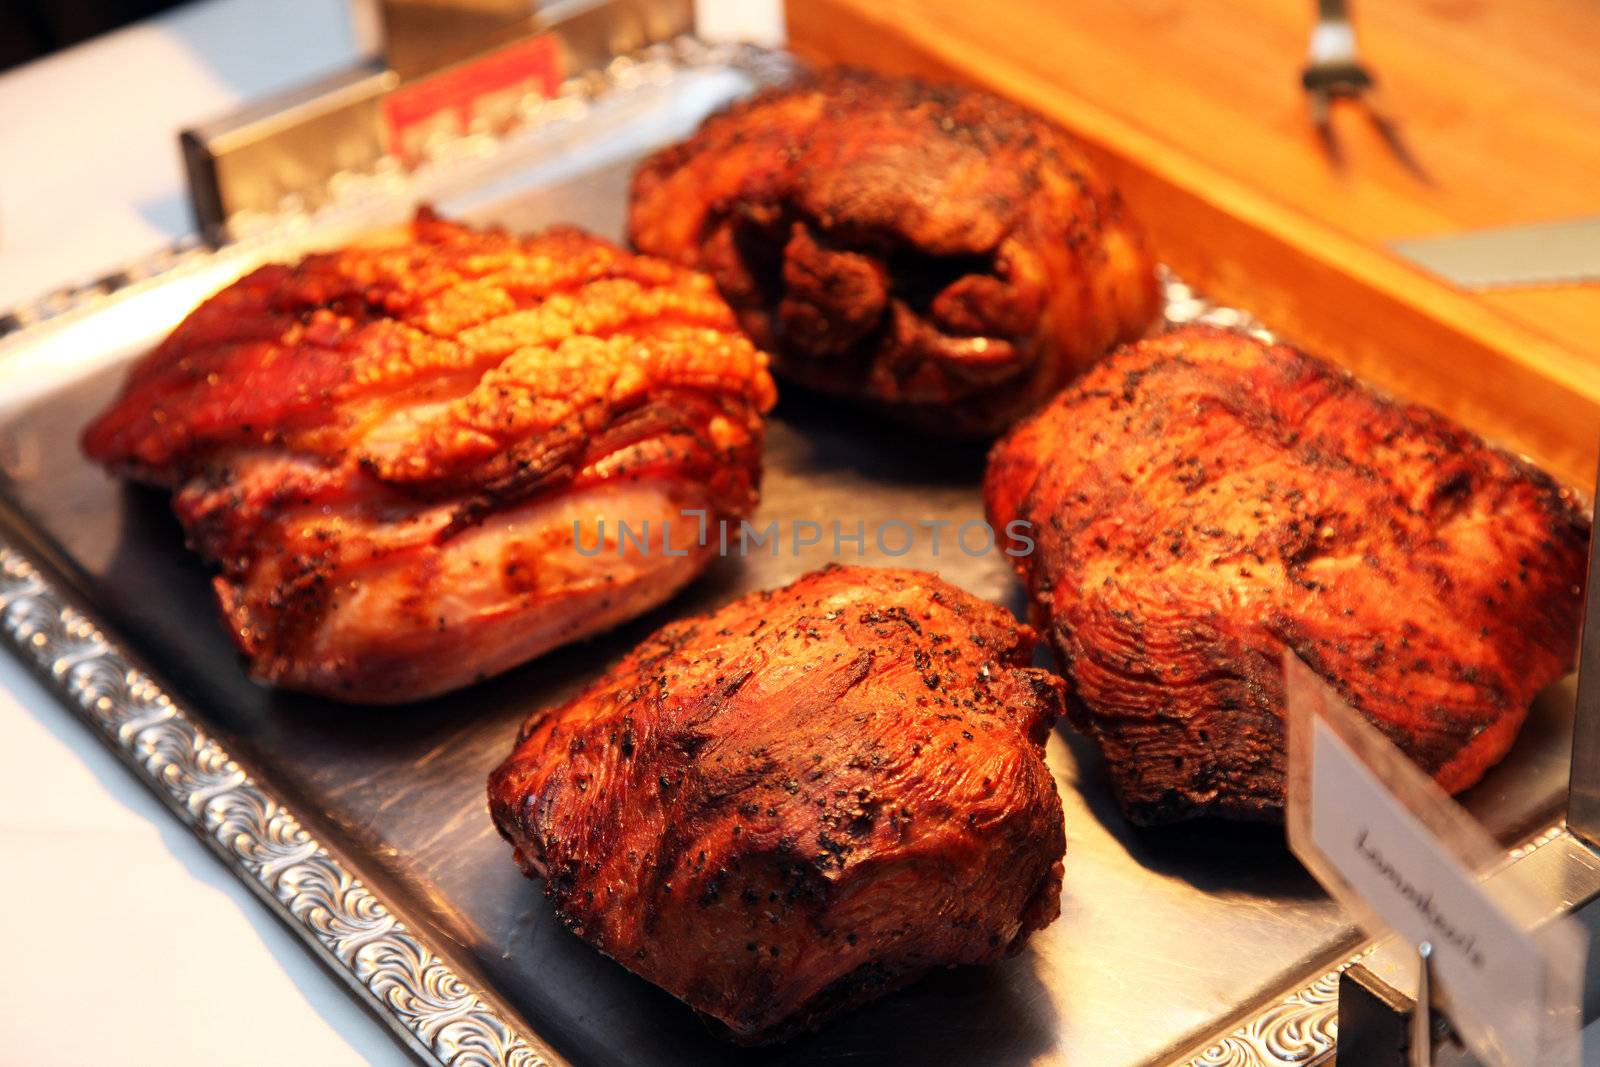 Cuts of roast meat on a buffet by Farina6000